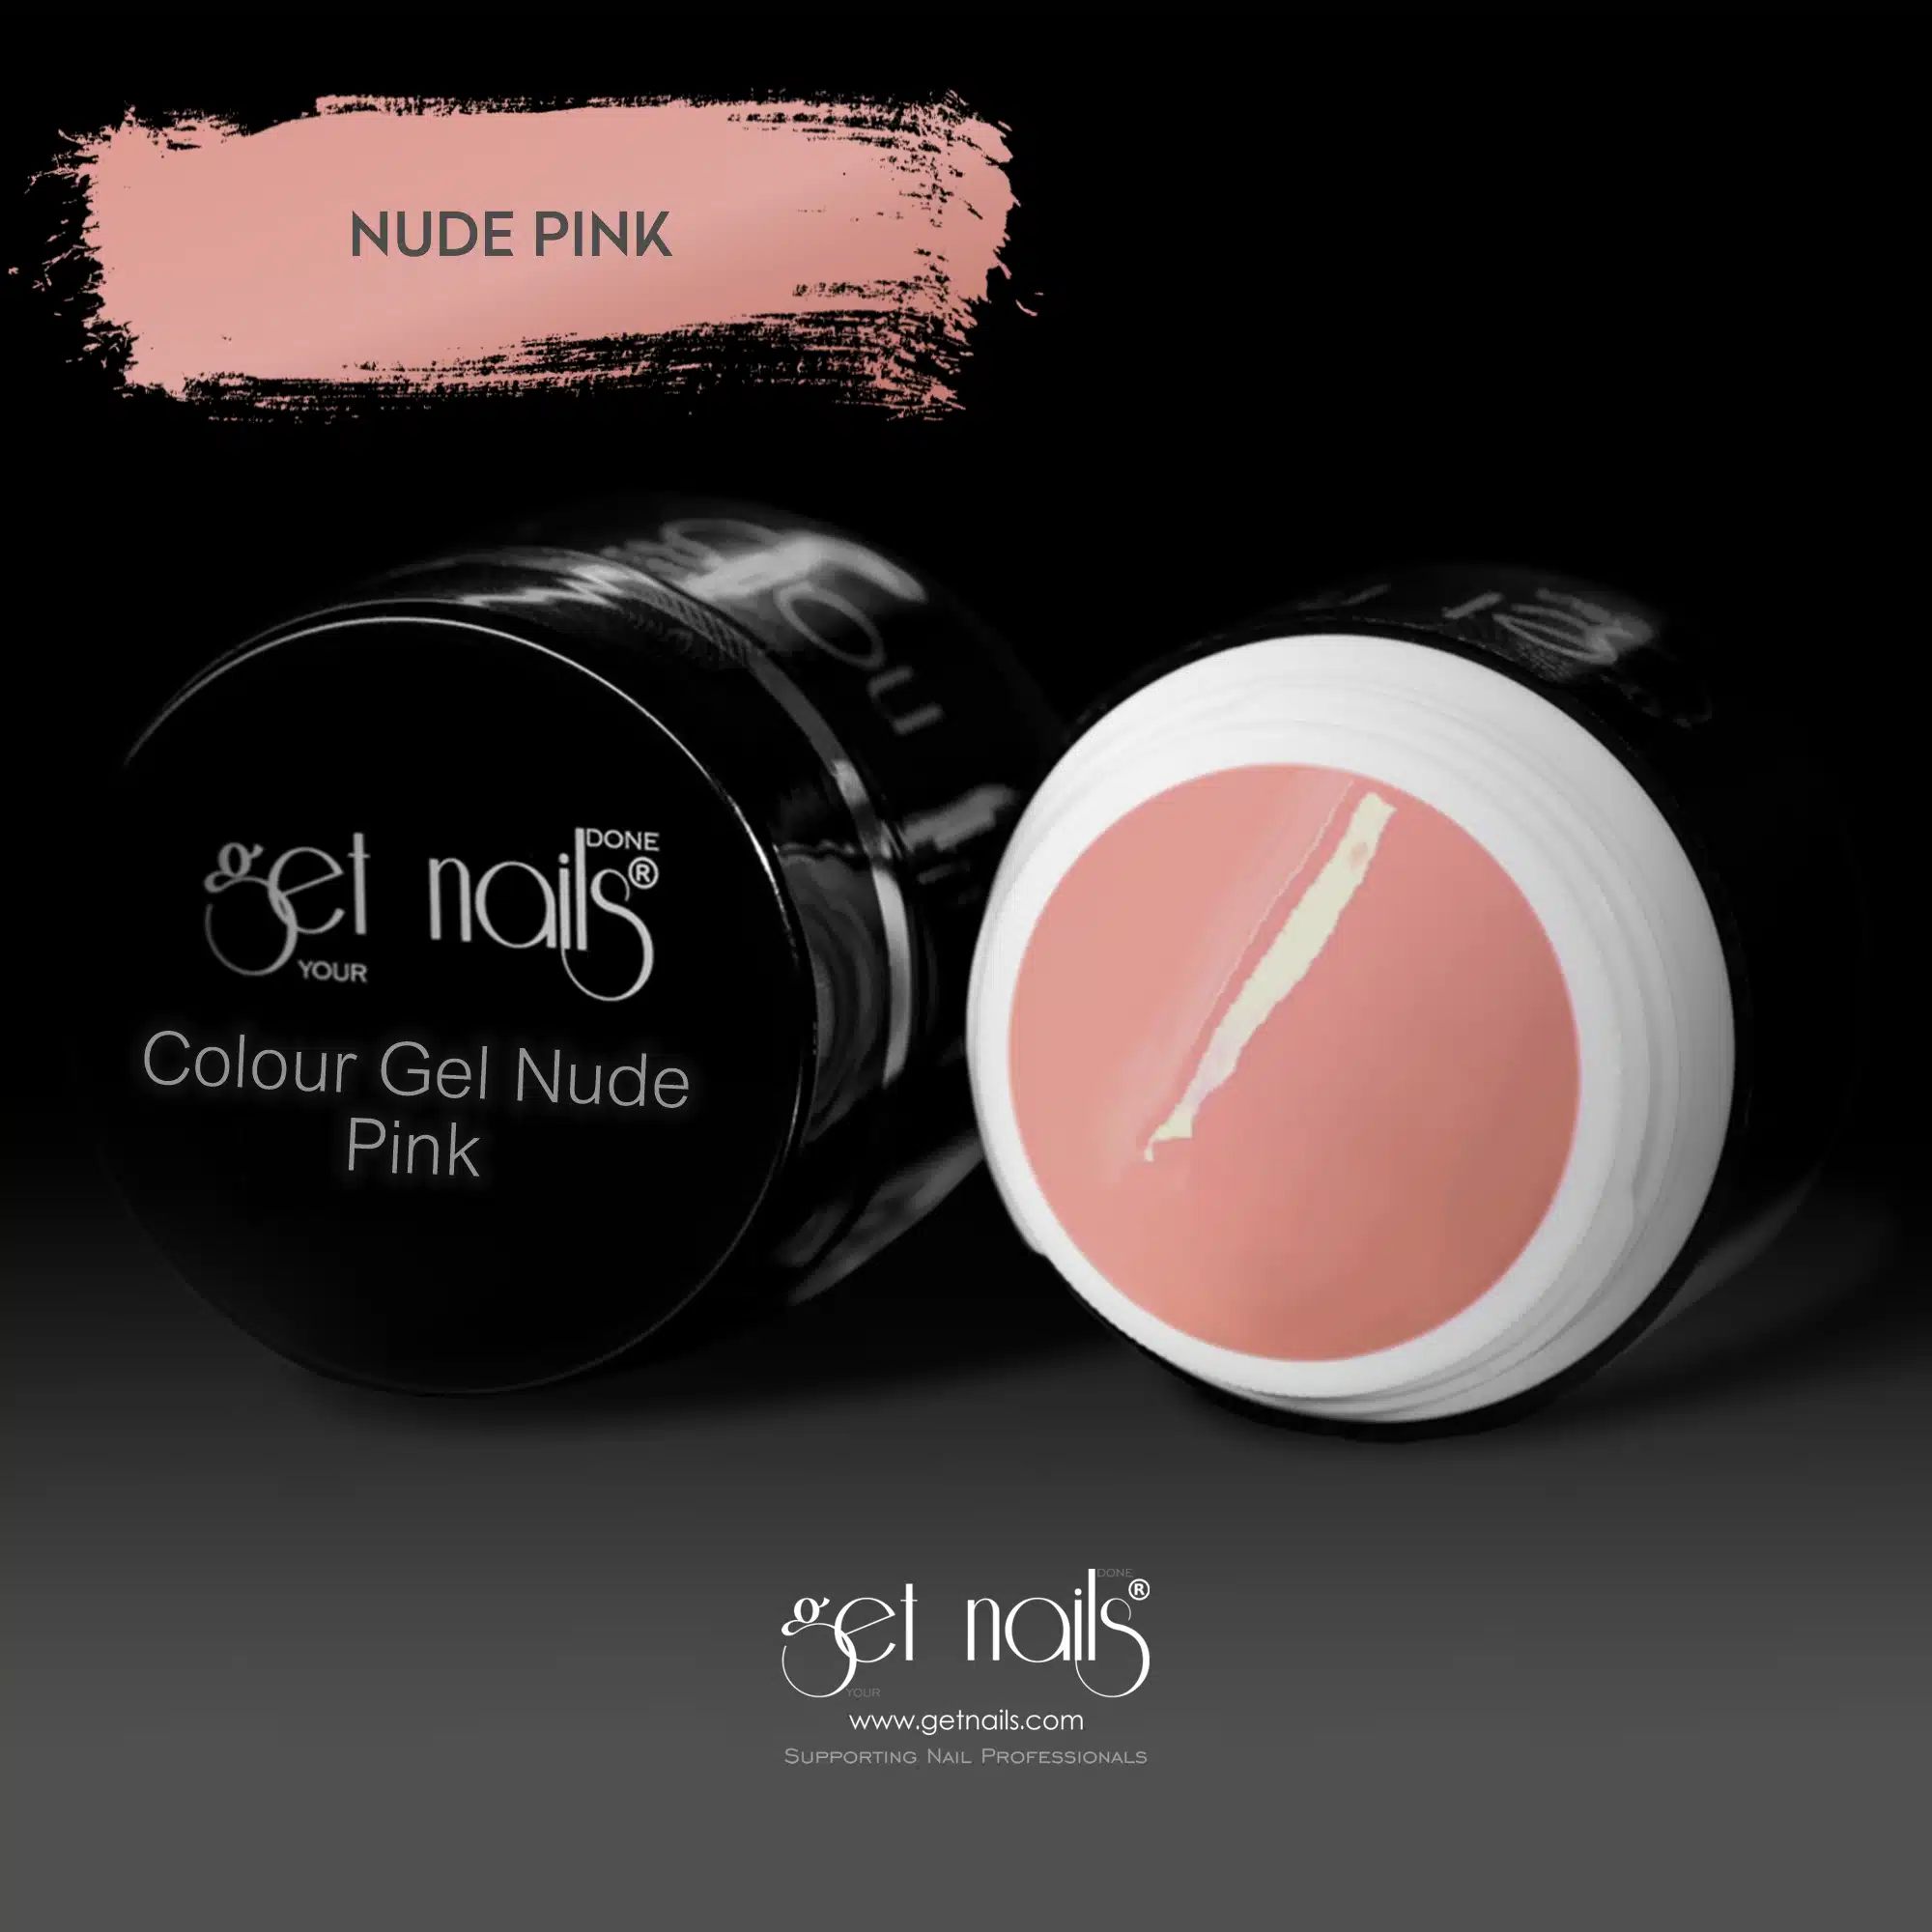 Get Nails Austria - Colour Gel Nude Pink 5g